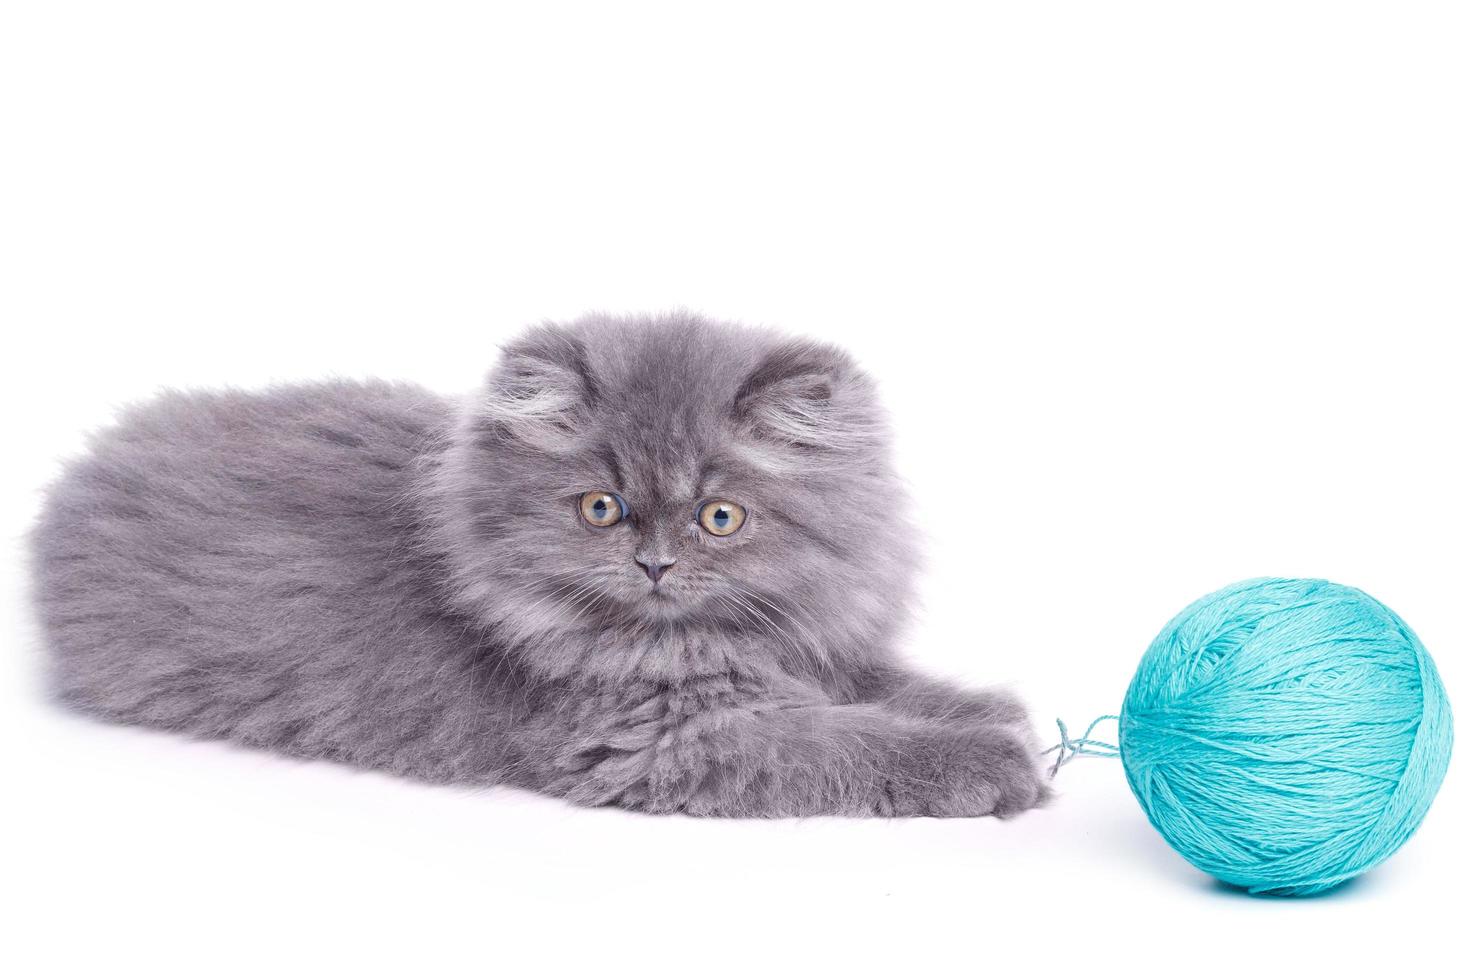 Cute little kitten and ball of yarn photo